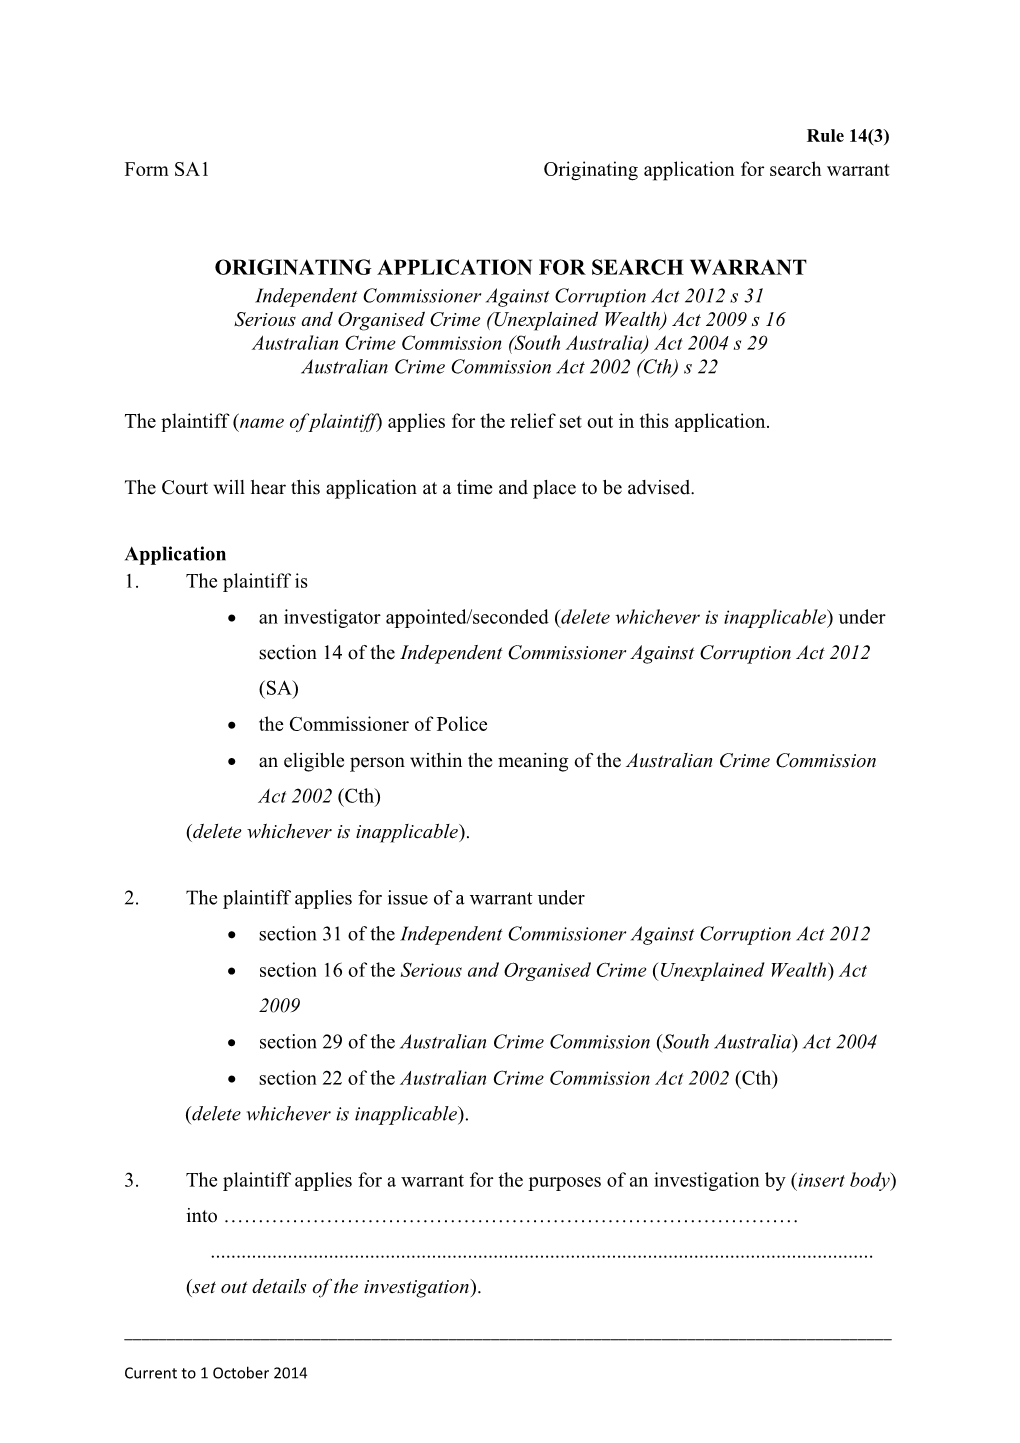 Form SA1 - Originating Application for Search Warrant